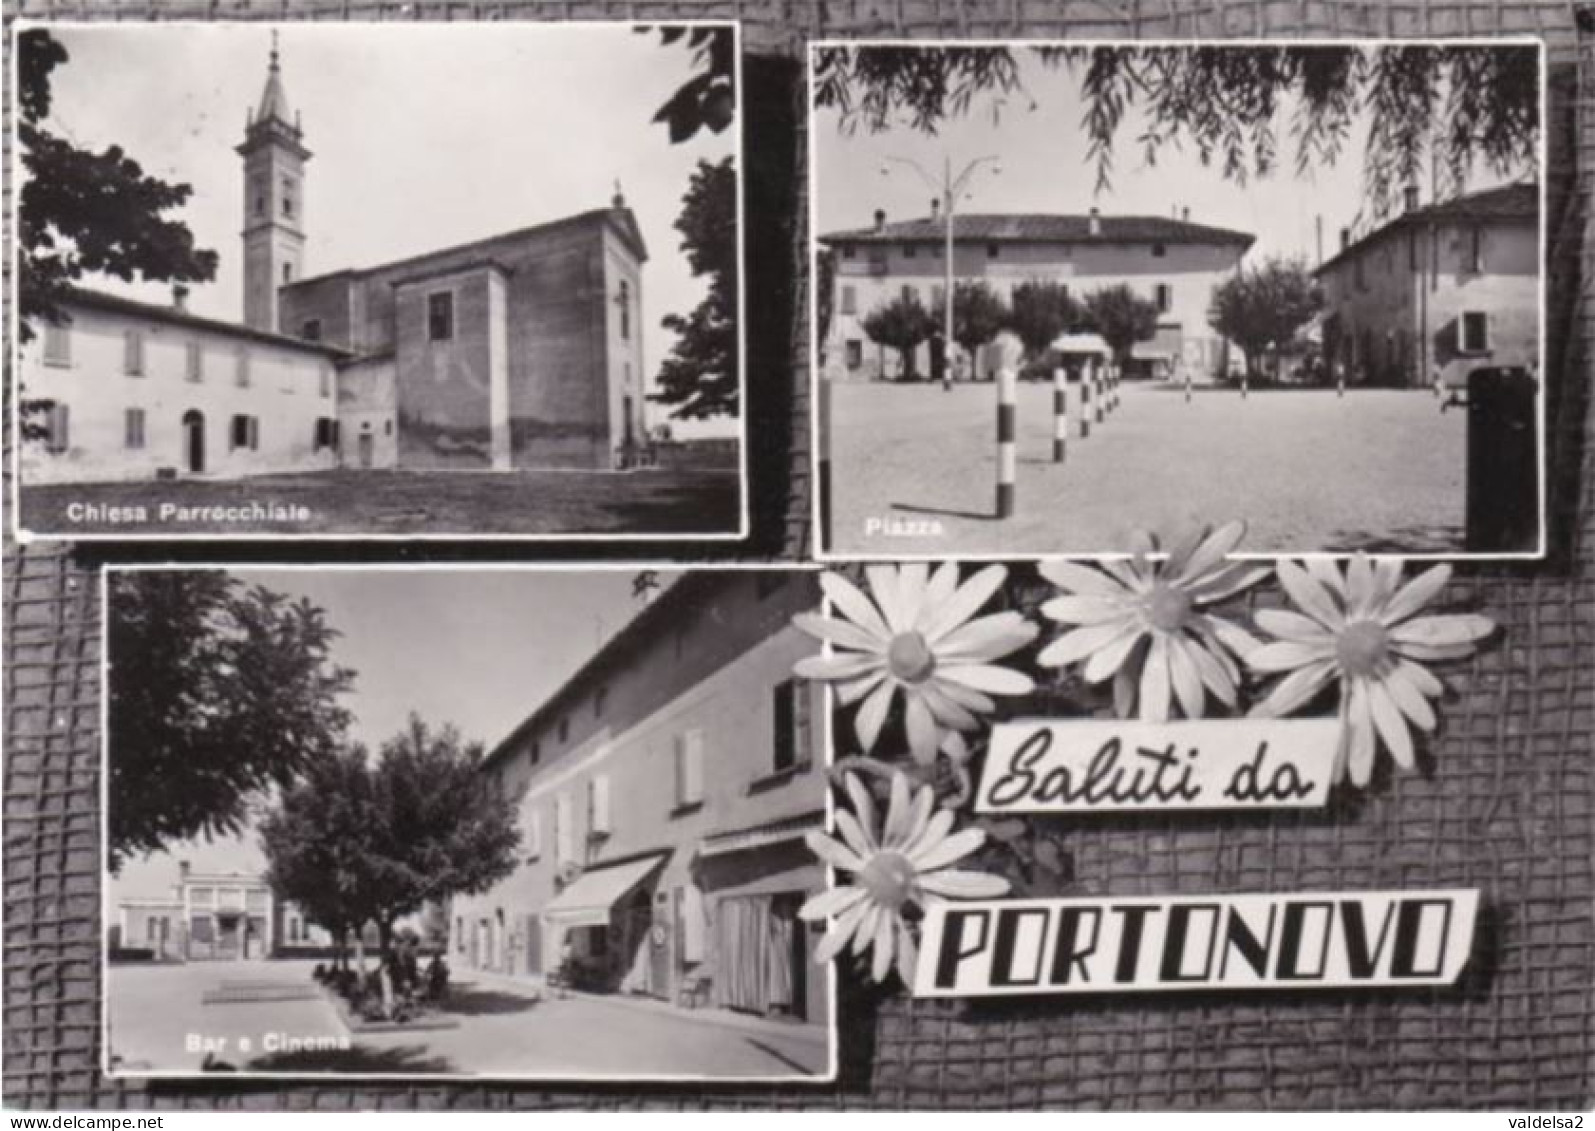 SALUTI DA PORTONOVO - MEDICINA - BOLOGNA - 3 VEDUTE - CHIESA PARROCCHIALE - PIAZZA - BAR E CINEMA - 1968 - Bologna